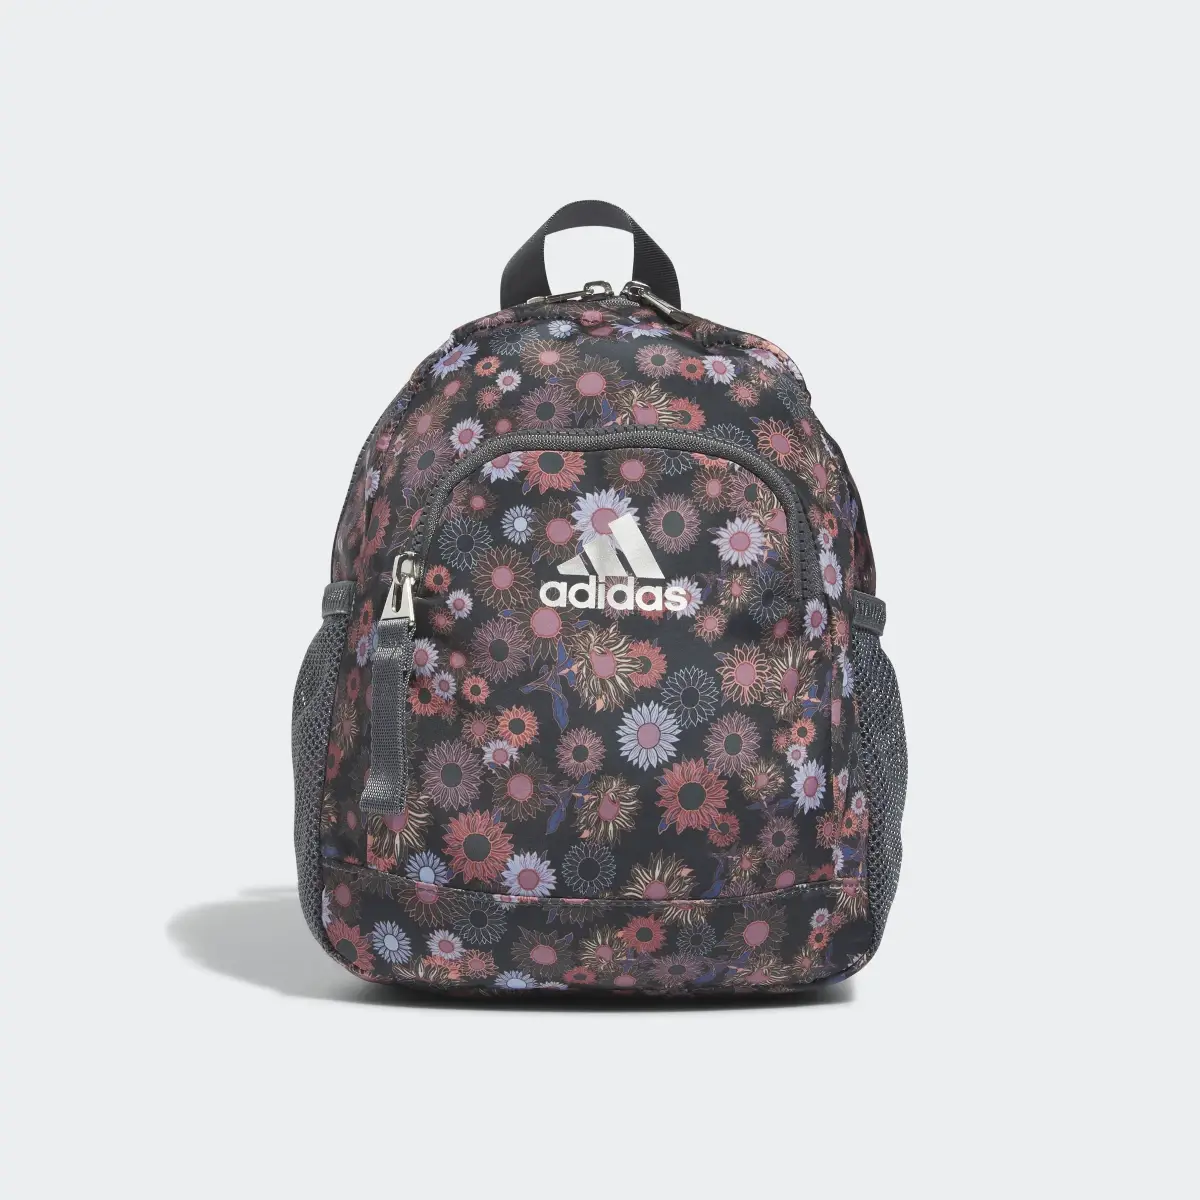 Adidas Linear 3 Mini Backpack. 2